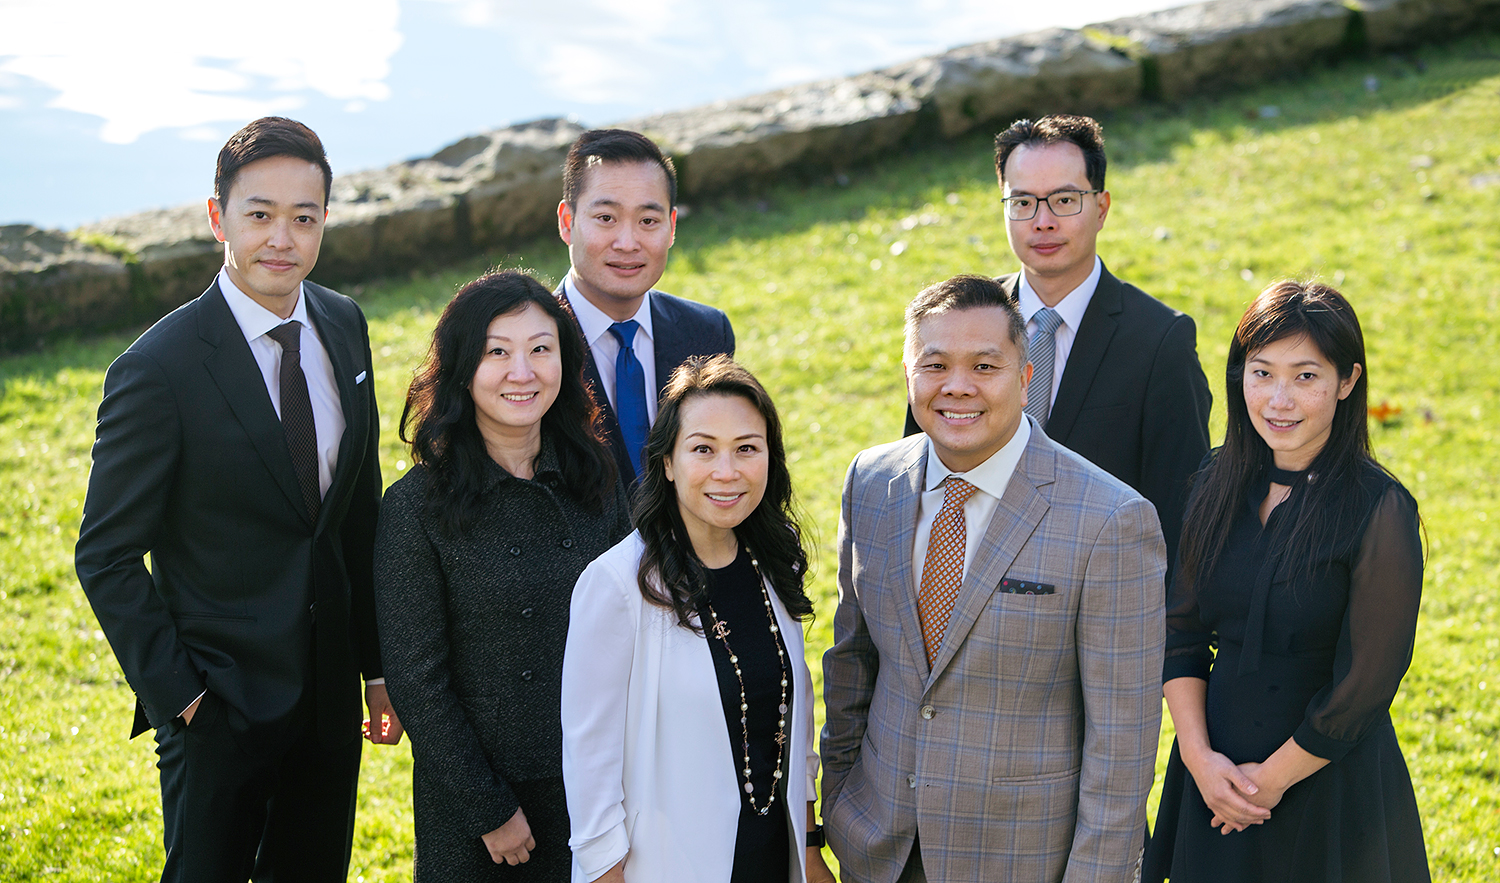 The The Choo & Pang Wealth Advisory Group team